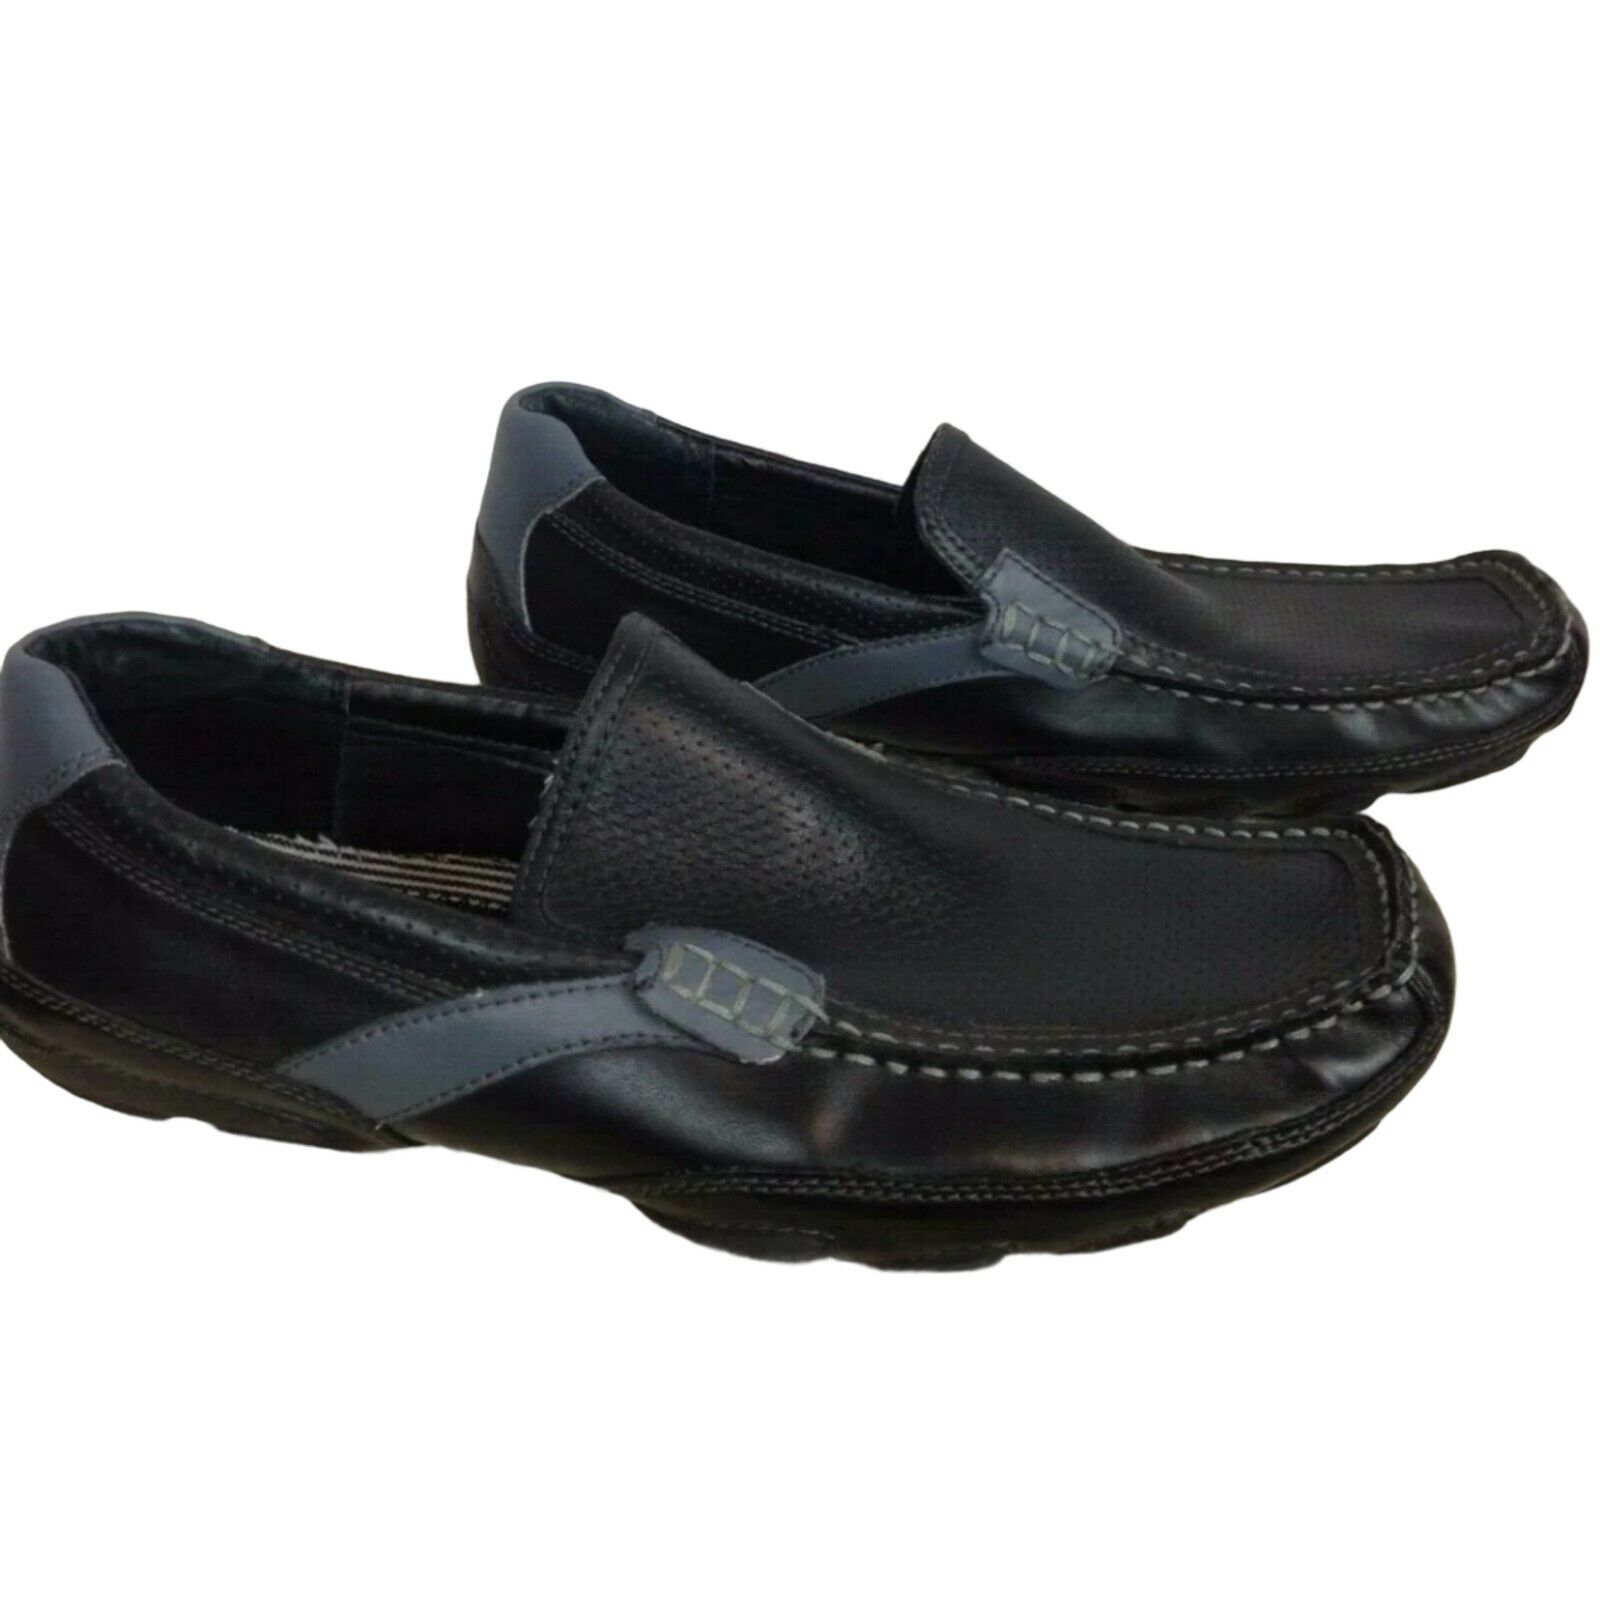 Steve Madden Shoes Men's Cheap sale Size Black Slip On Some reservation 10.5 Leather